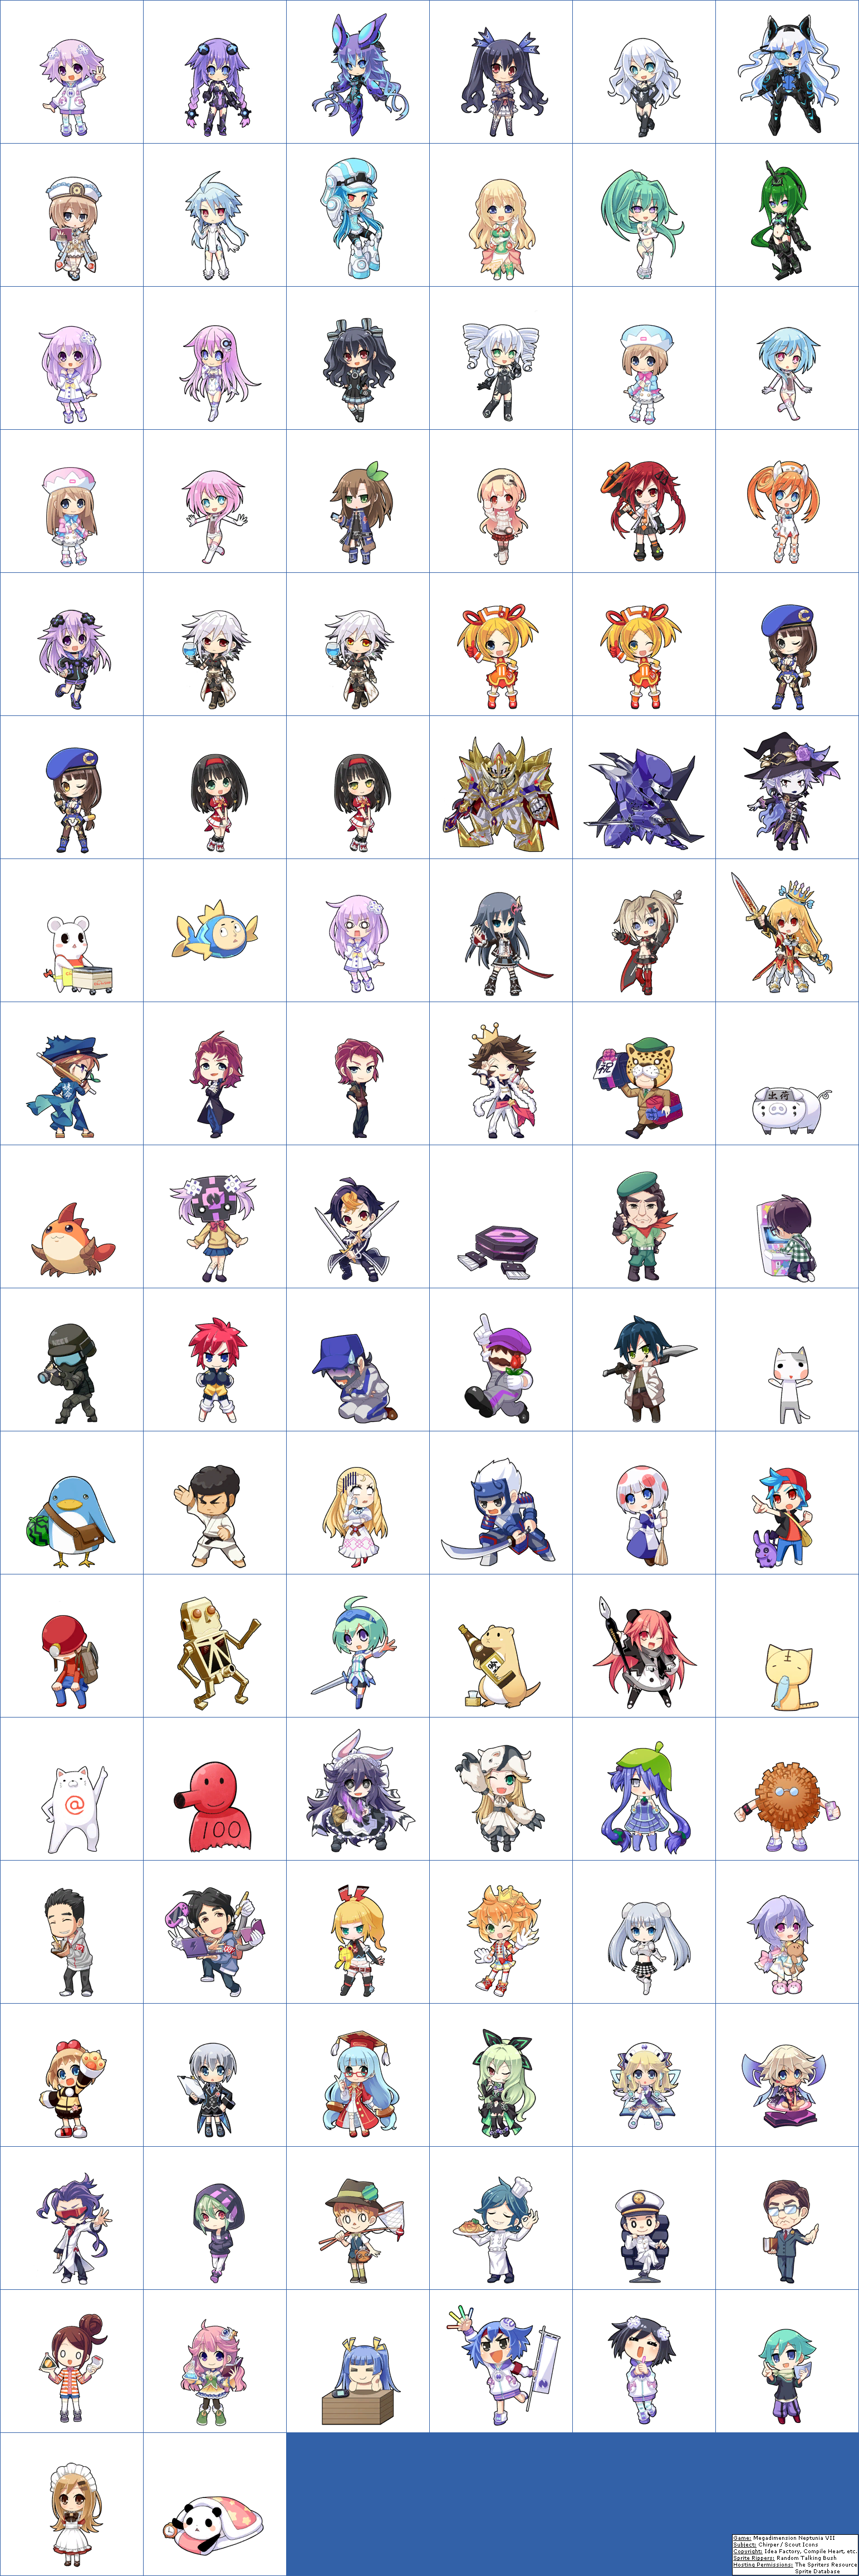 Megadimension Neptunia VII - Chirper / Scout Icons